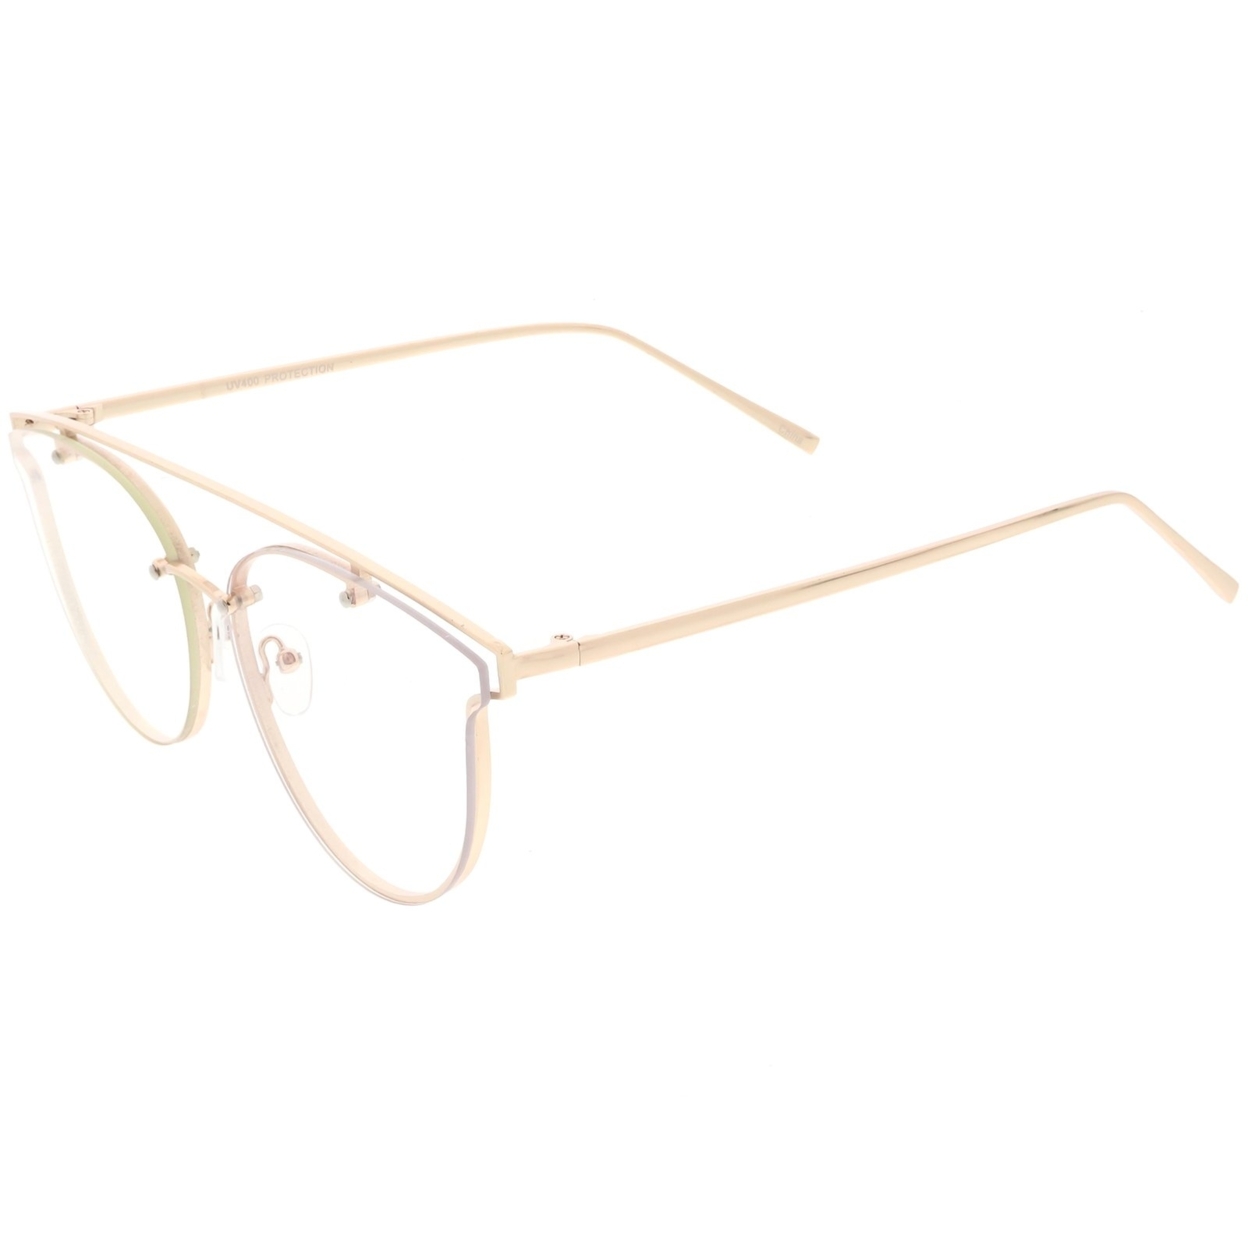 Modern Crossbar Horn Rimmed Rimless Eyeglasses Clear Round Flat Lens 58mm - Gold / Clear